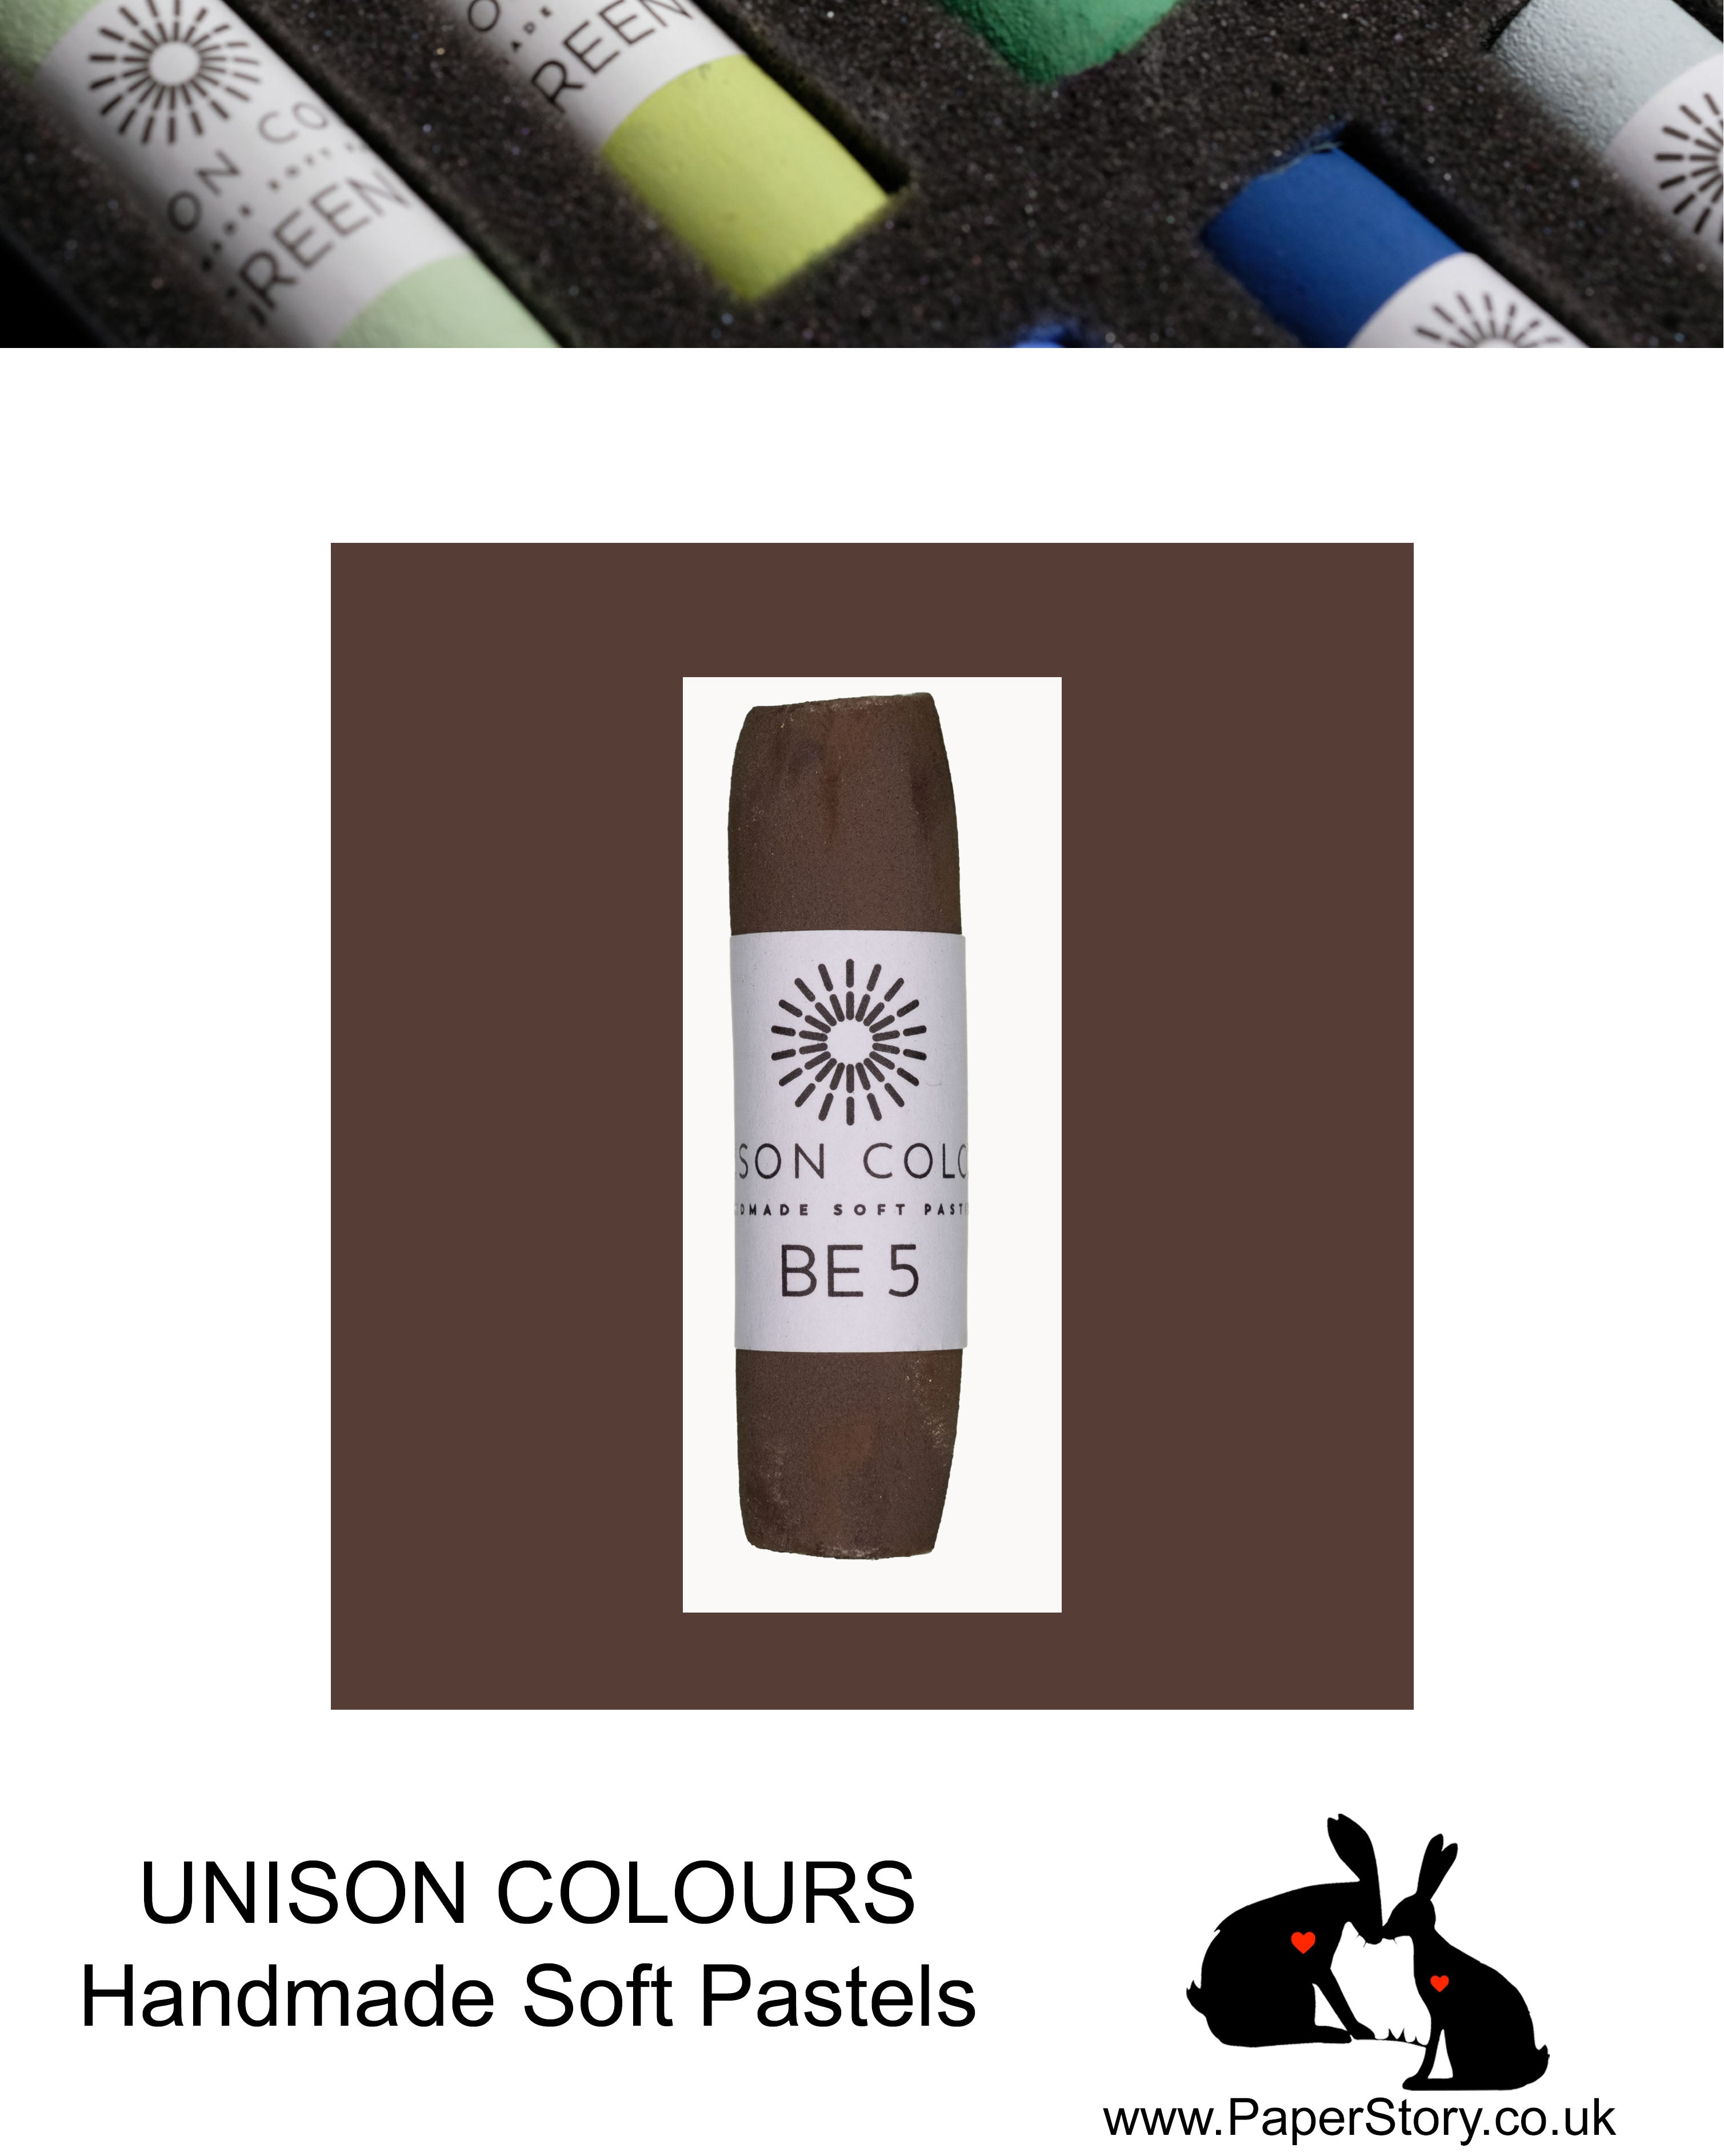 Unison Colour Handmade Soft Pastels Brown Earth 5 - Size Regular